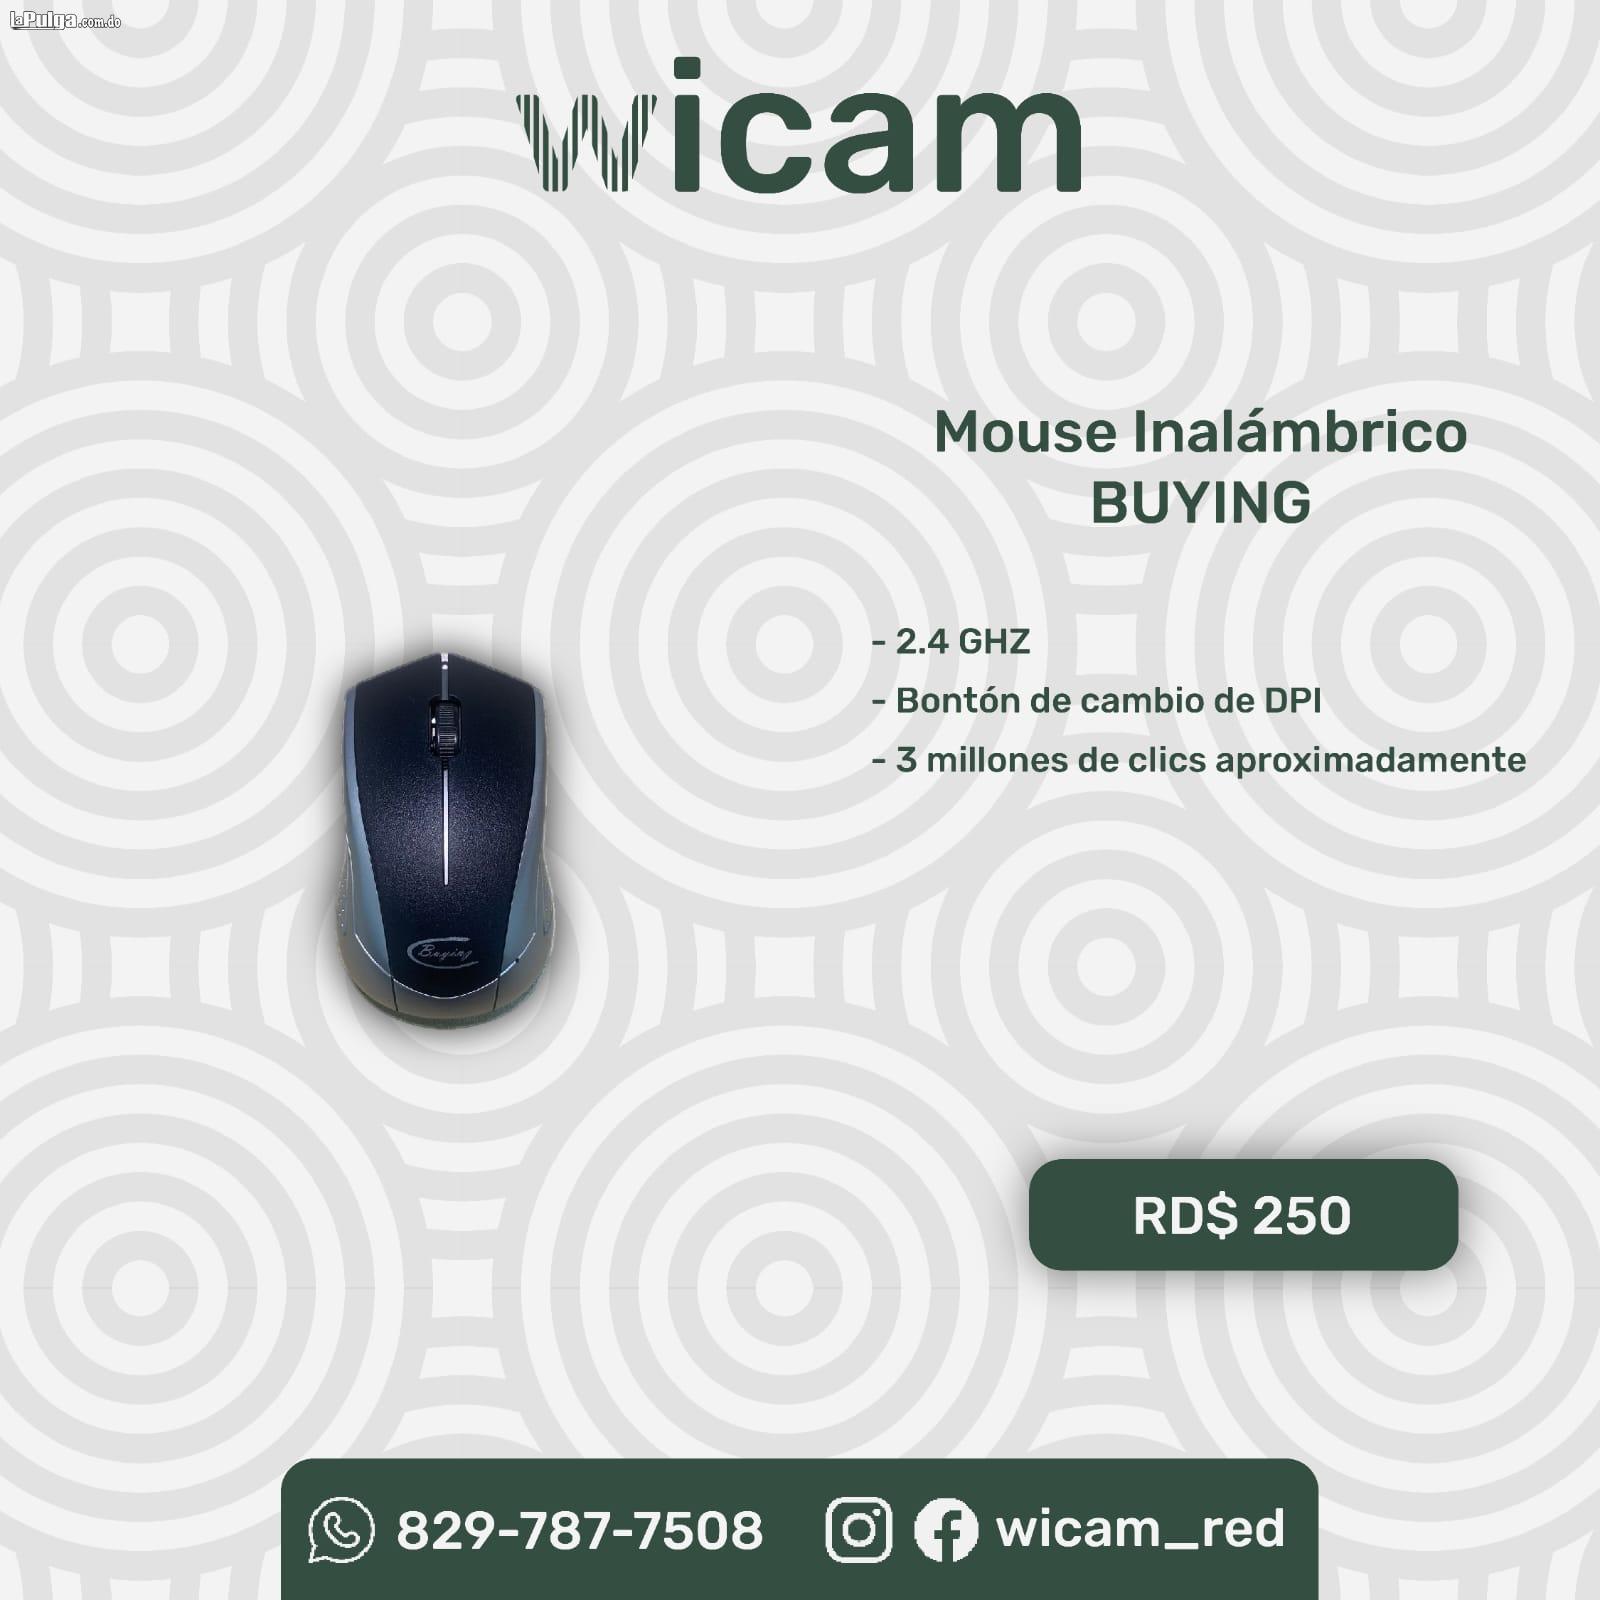 Mouse inalambrico buying  Foto 7151753-1.jpg